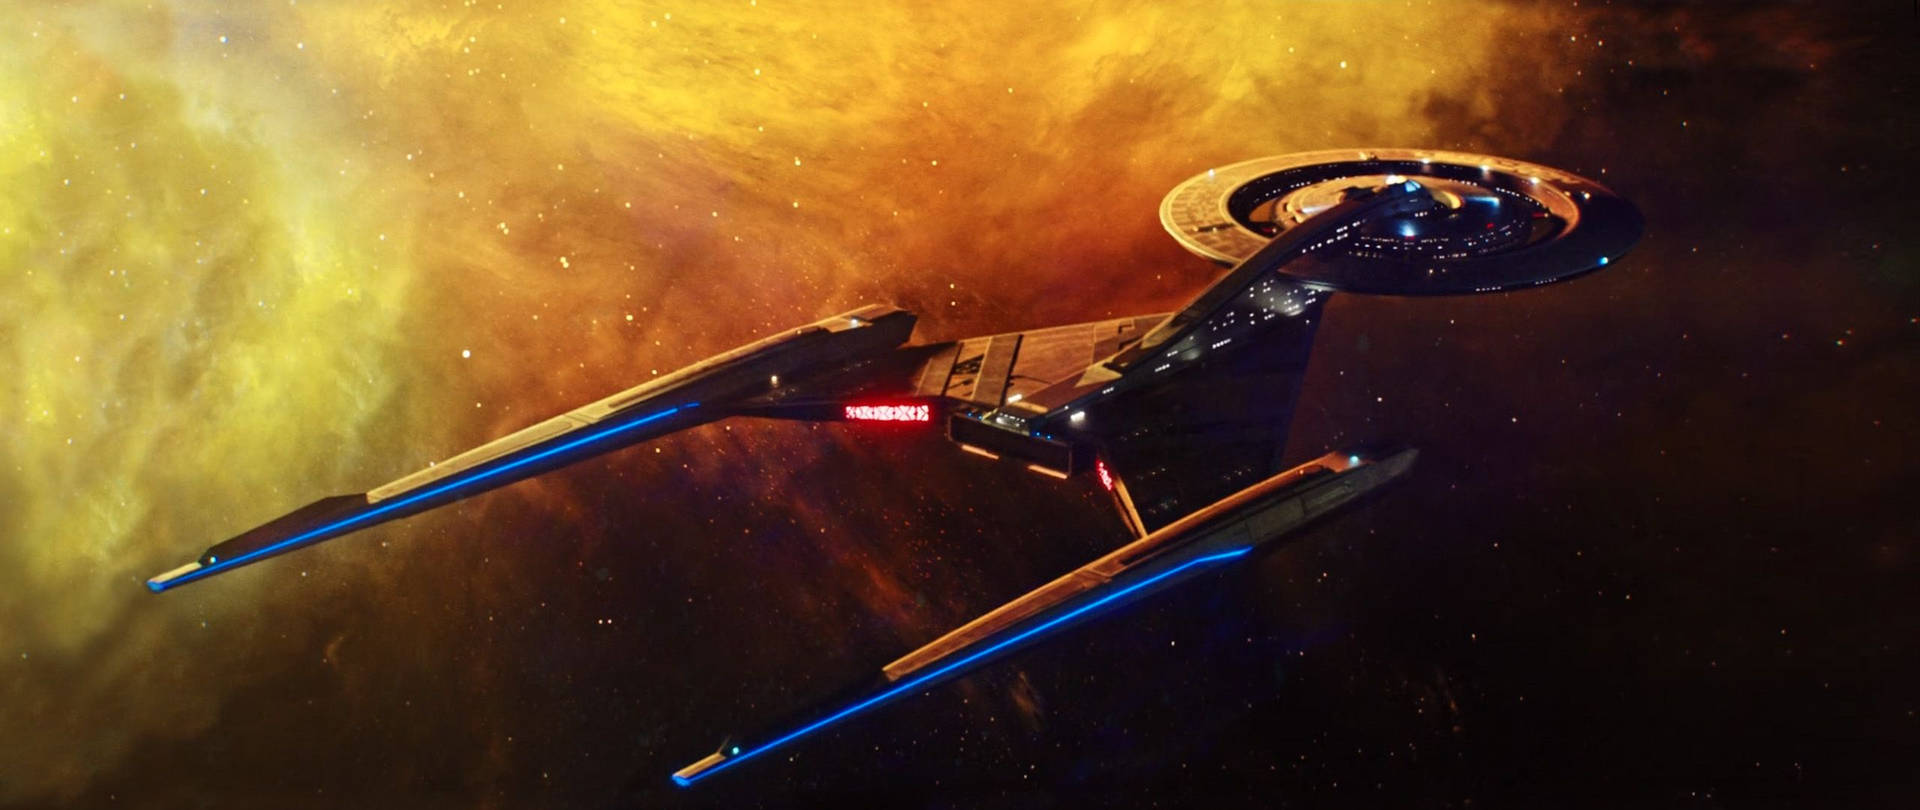 Amazing wallpaper of Star Trek ship. 